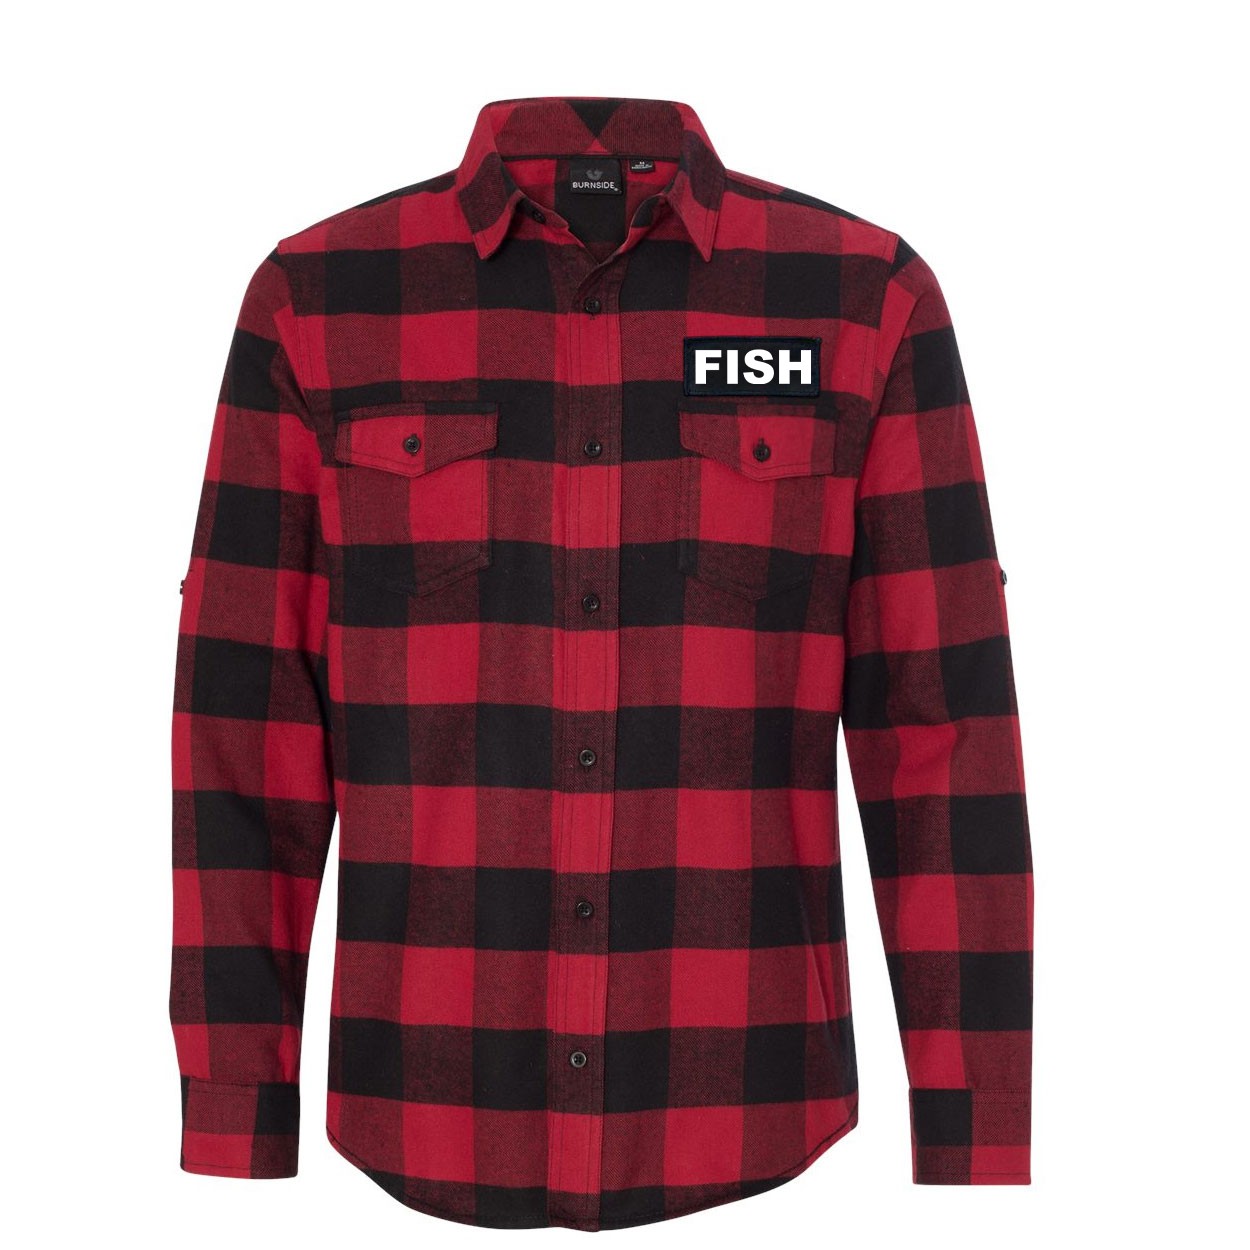 Fish Brand Logo Classic Unisex Long Sleeve Woven Patch Flannel Shirt Red/Black Buffalo (White Logo)